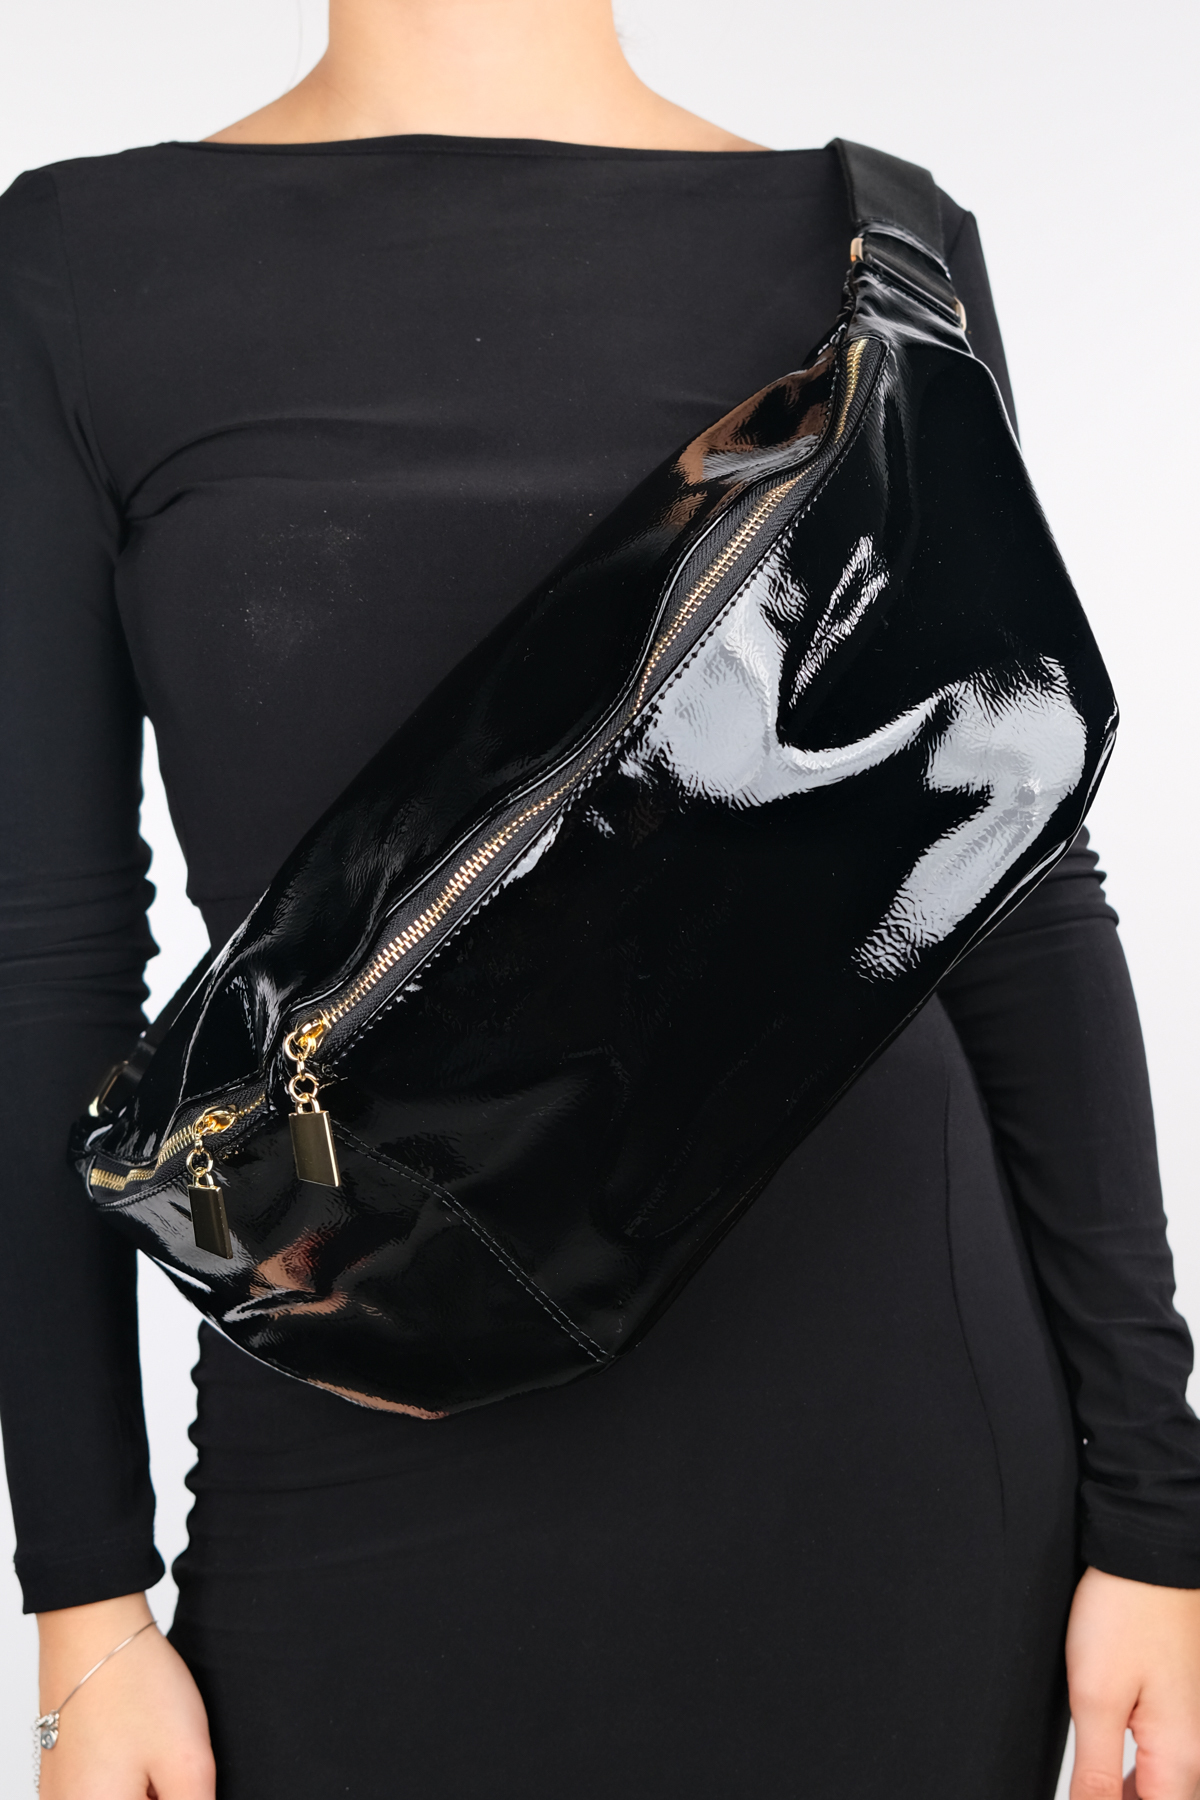 LuviShoes VENTA Black Patent Leather Women's Large Waist Bag